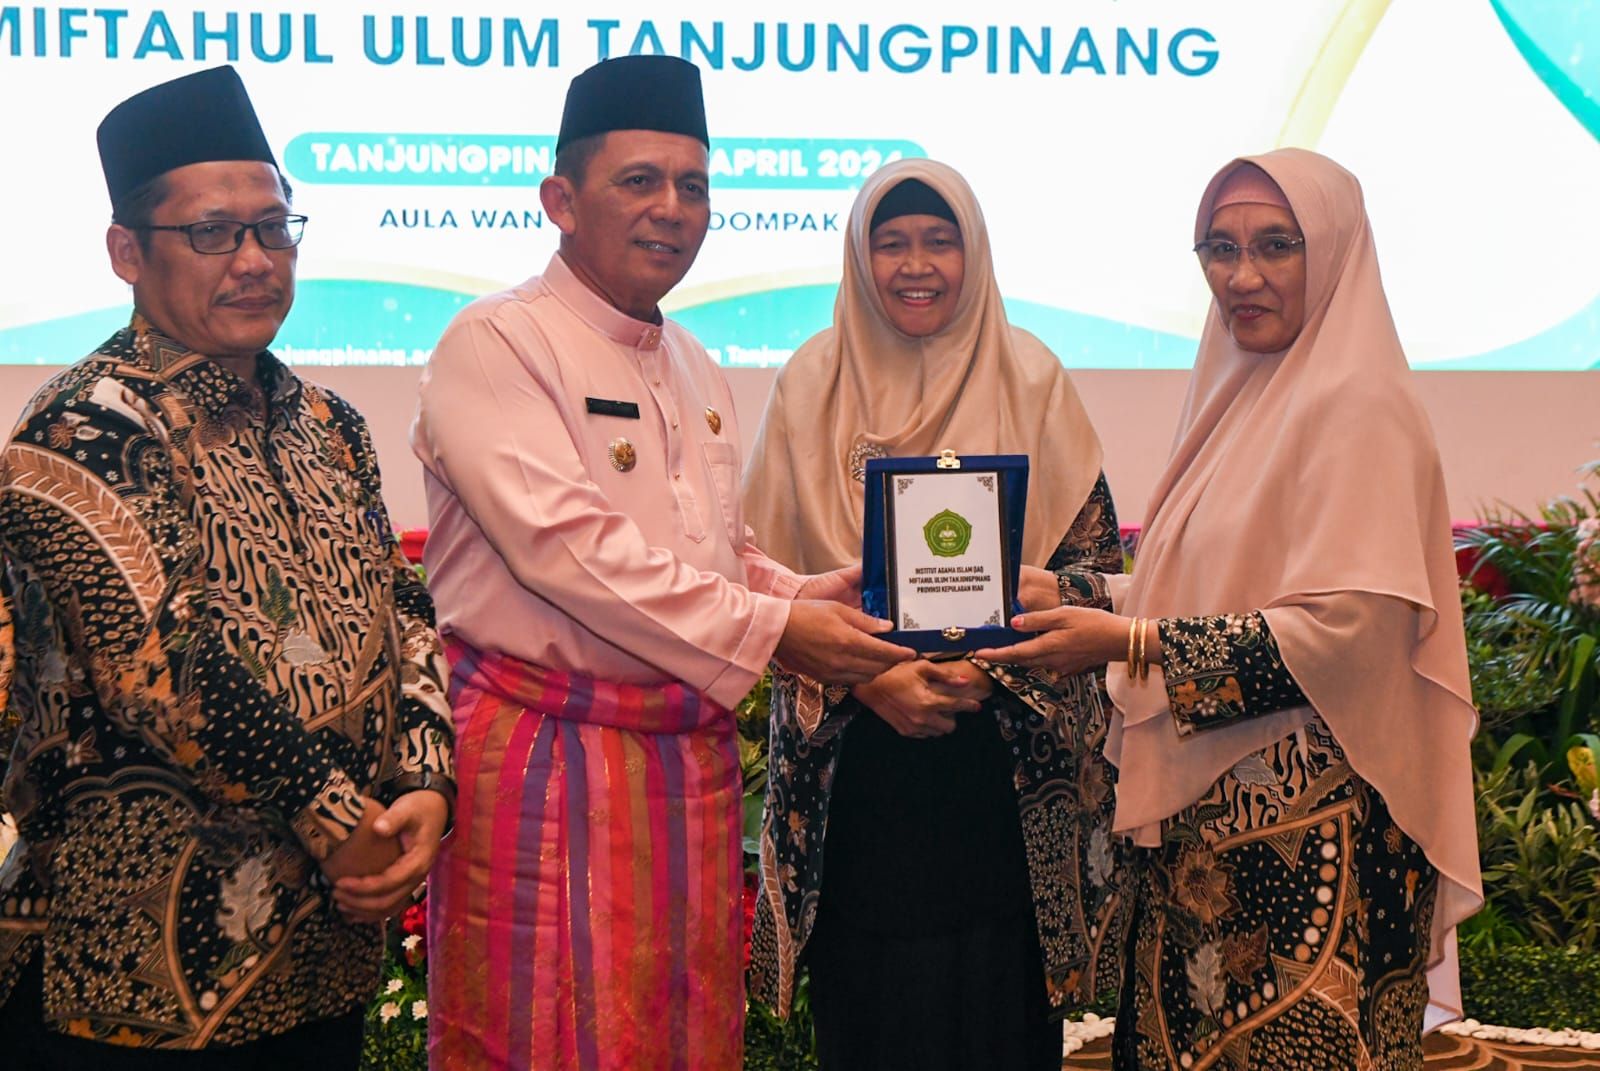 STAI Miftahul Ulum Resmi beralih status menjadi Institut Agama Islam Miftahul Ulum Tanjungpinang, kepulauan Riau (Kepri)